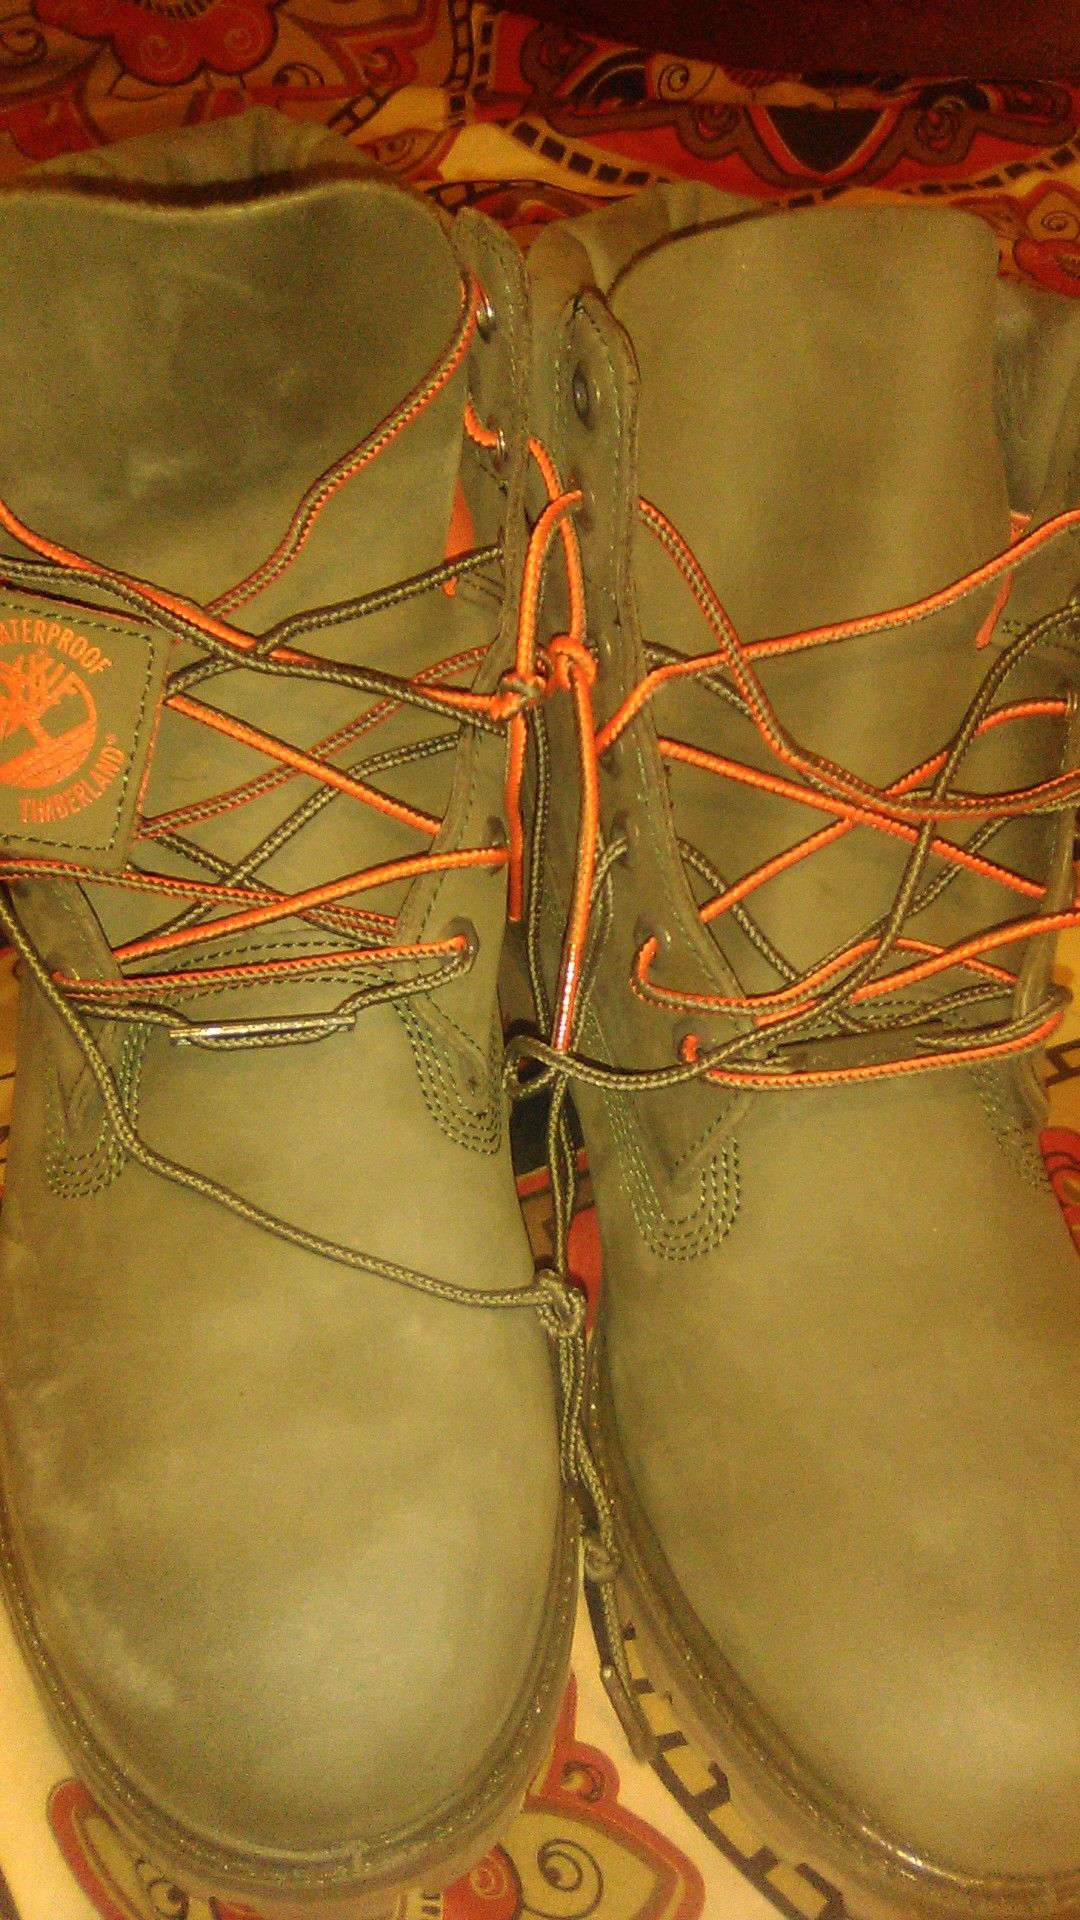 Waterproof Timberland boots